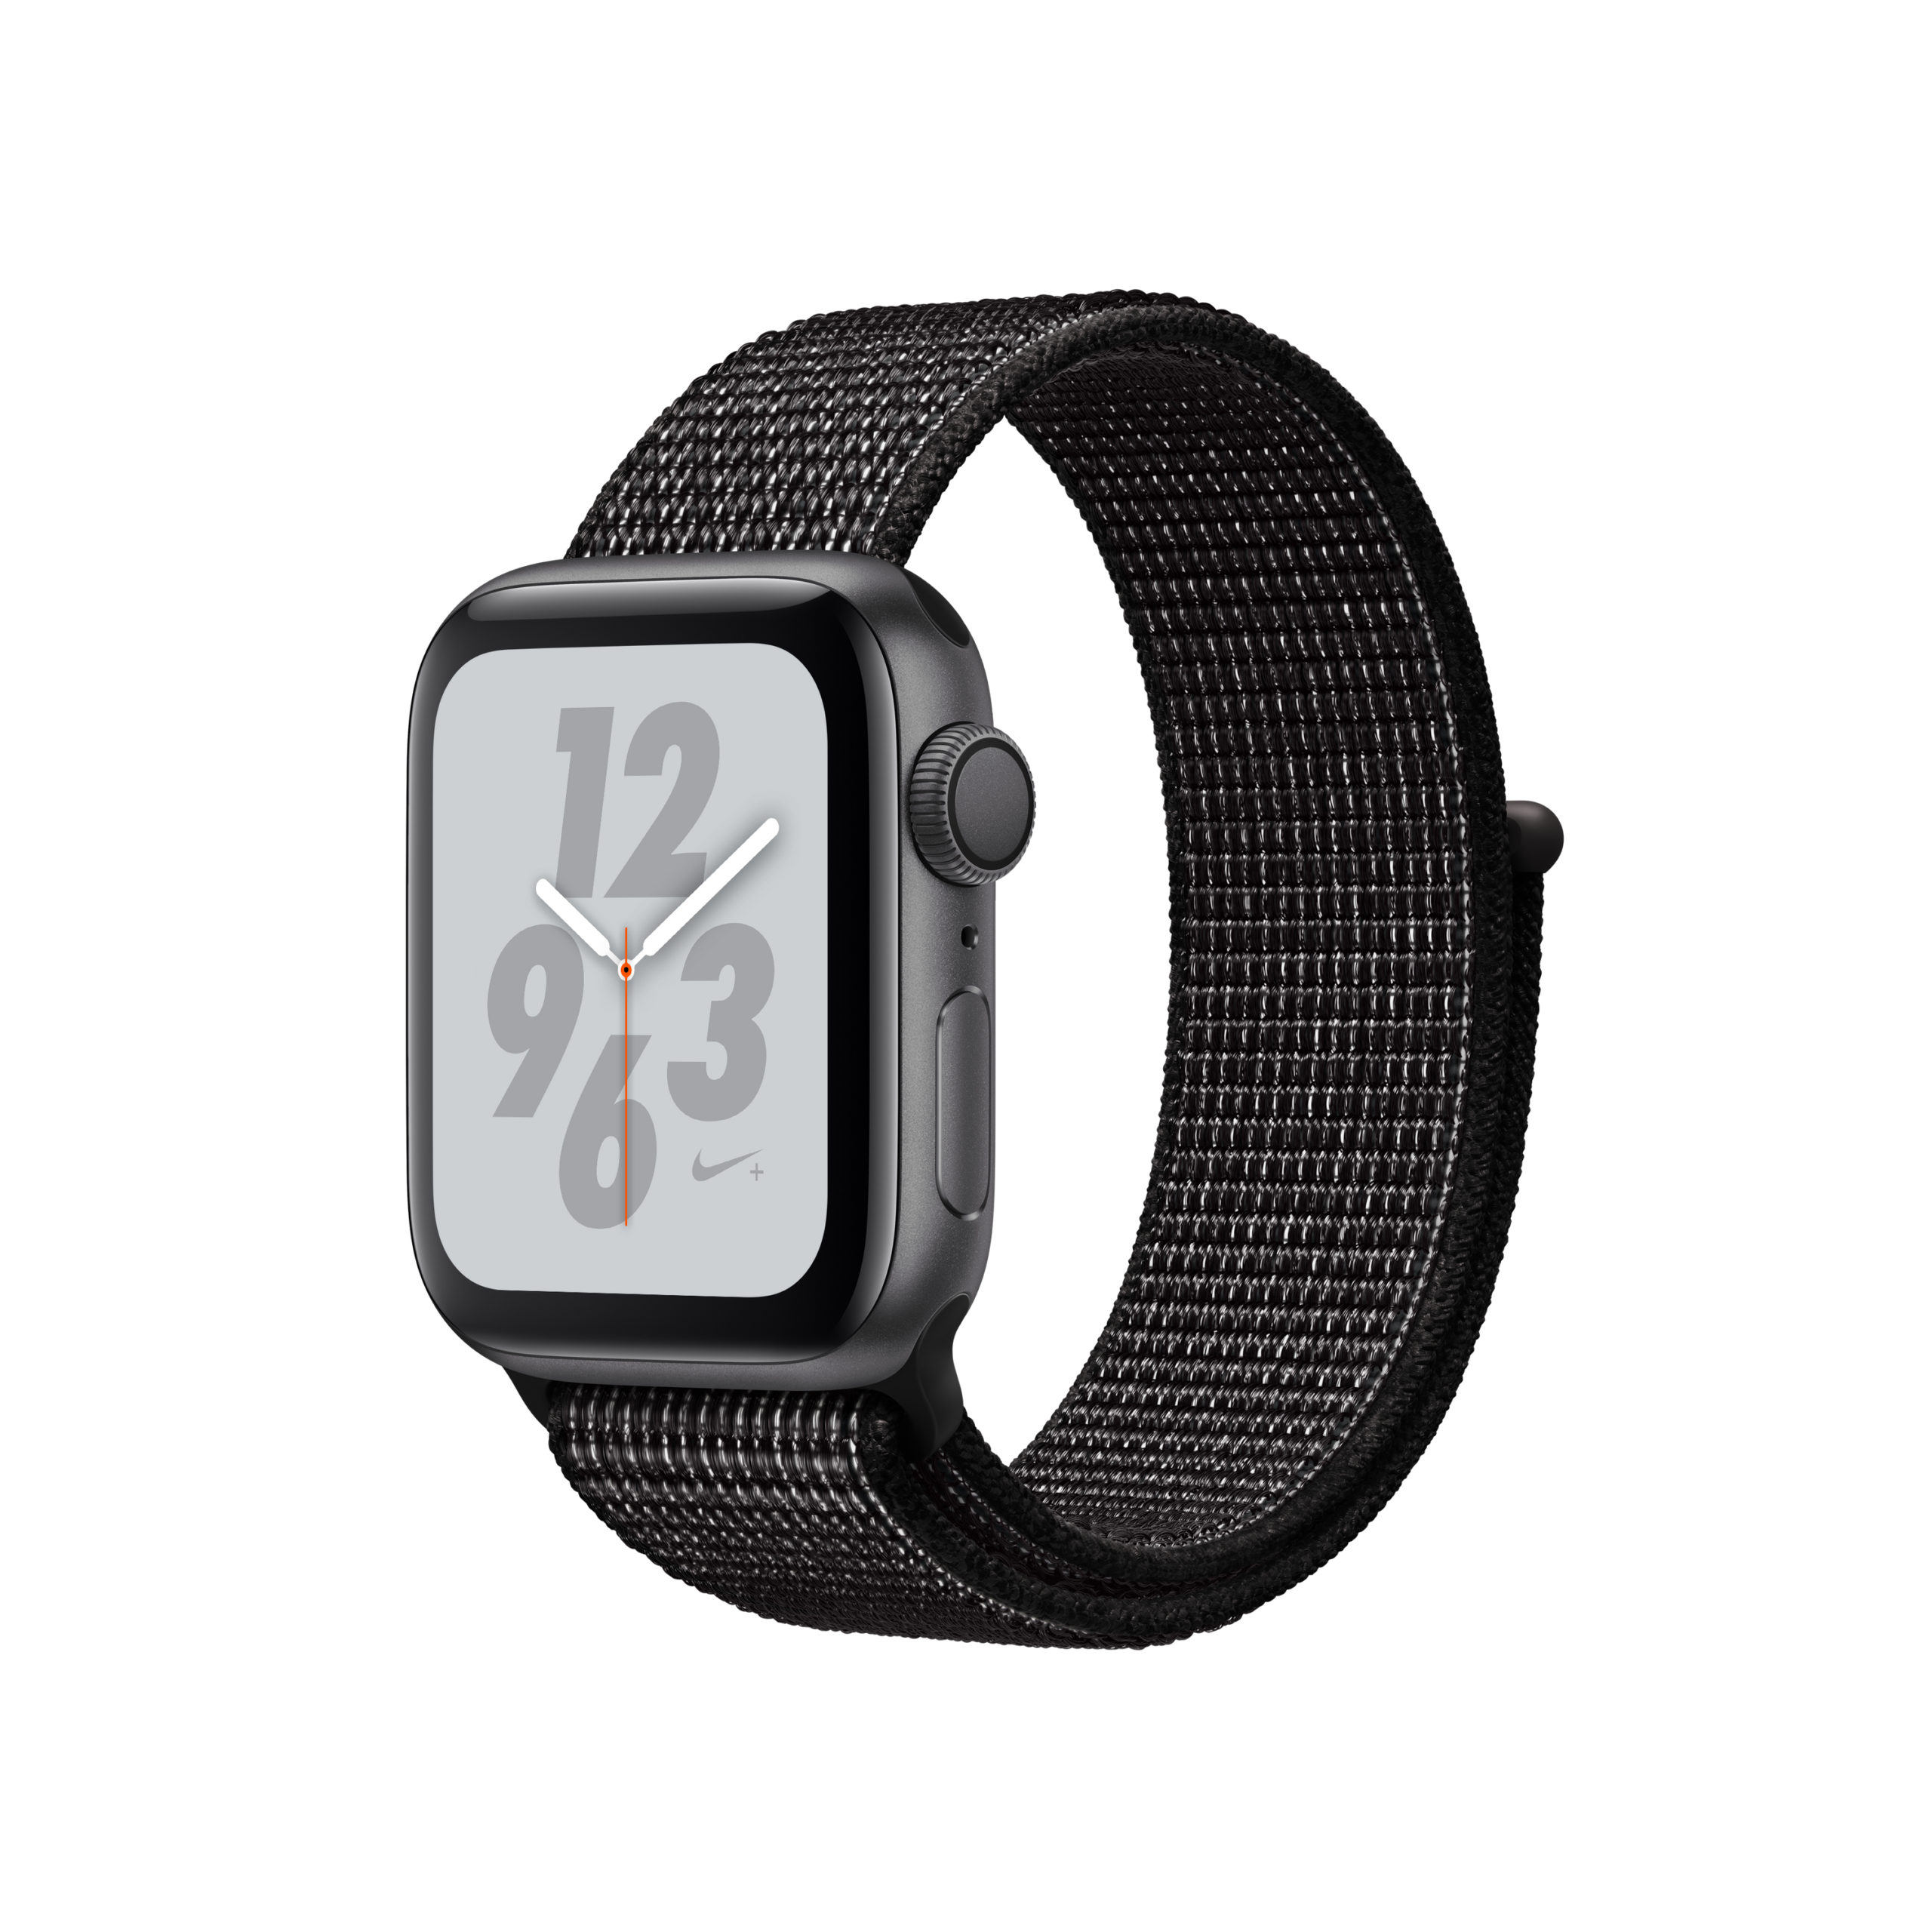 MU7G2LL/A - $261 - Apple Watch Nike+ Series 4 (GPS Only, 40mm, Space Gray  Aluminum, Black Nike Sport Loop)